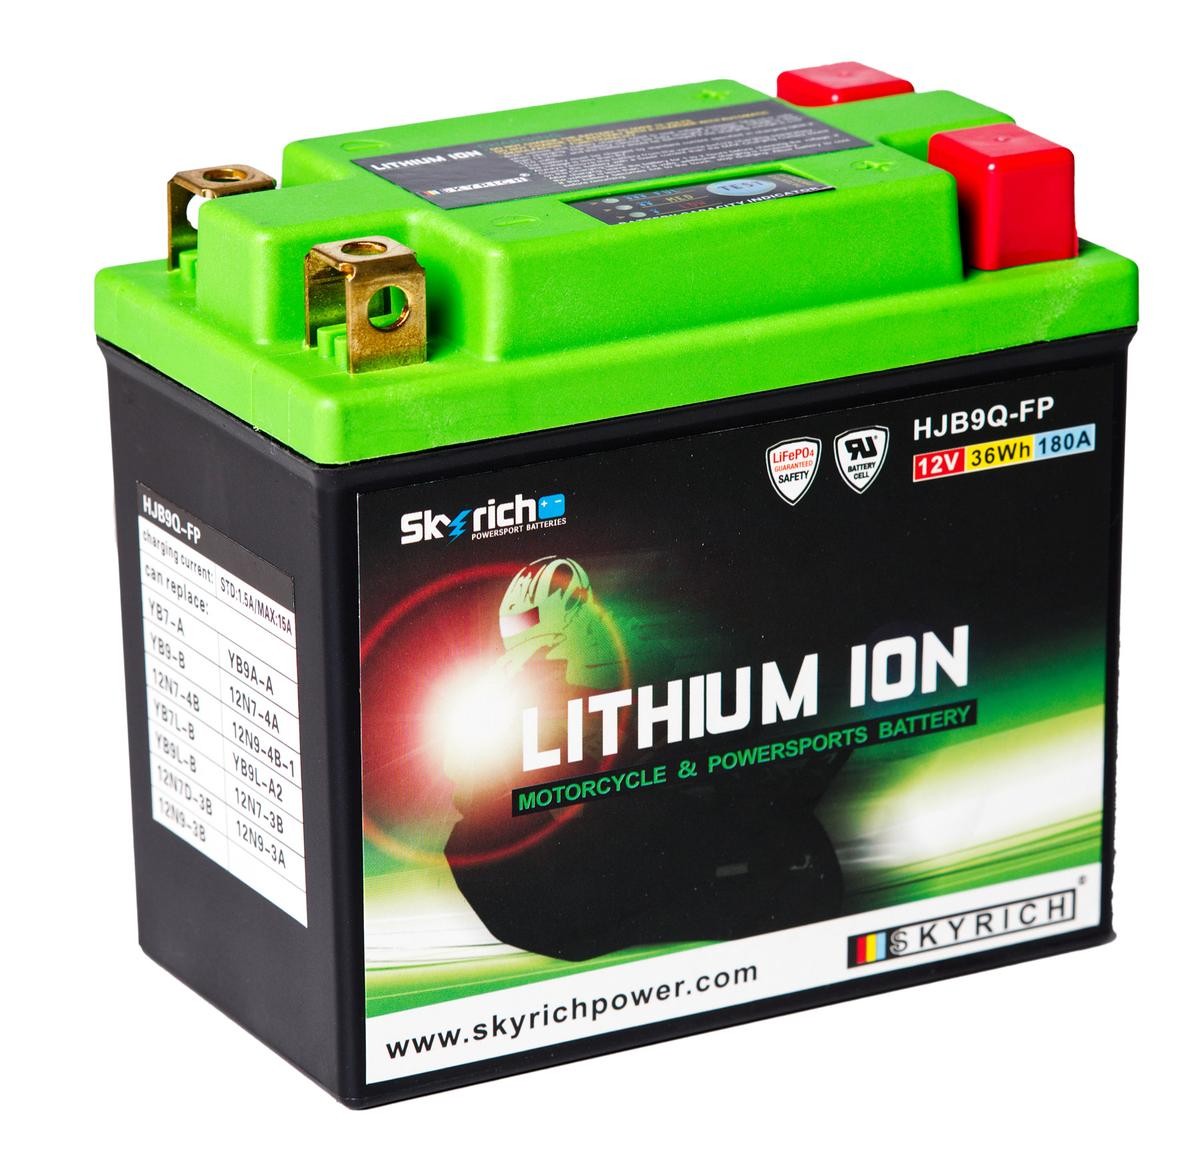 KAWASAKI ELIMINATOR Batterie 12V 3Ah 180A N Li-Ionen-Batterie SKYRICH LITHIUM ION HJB9Q-FP